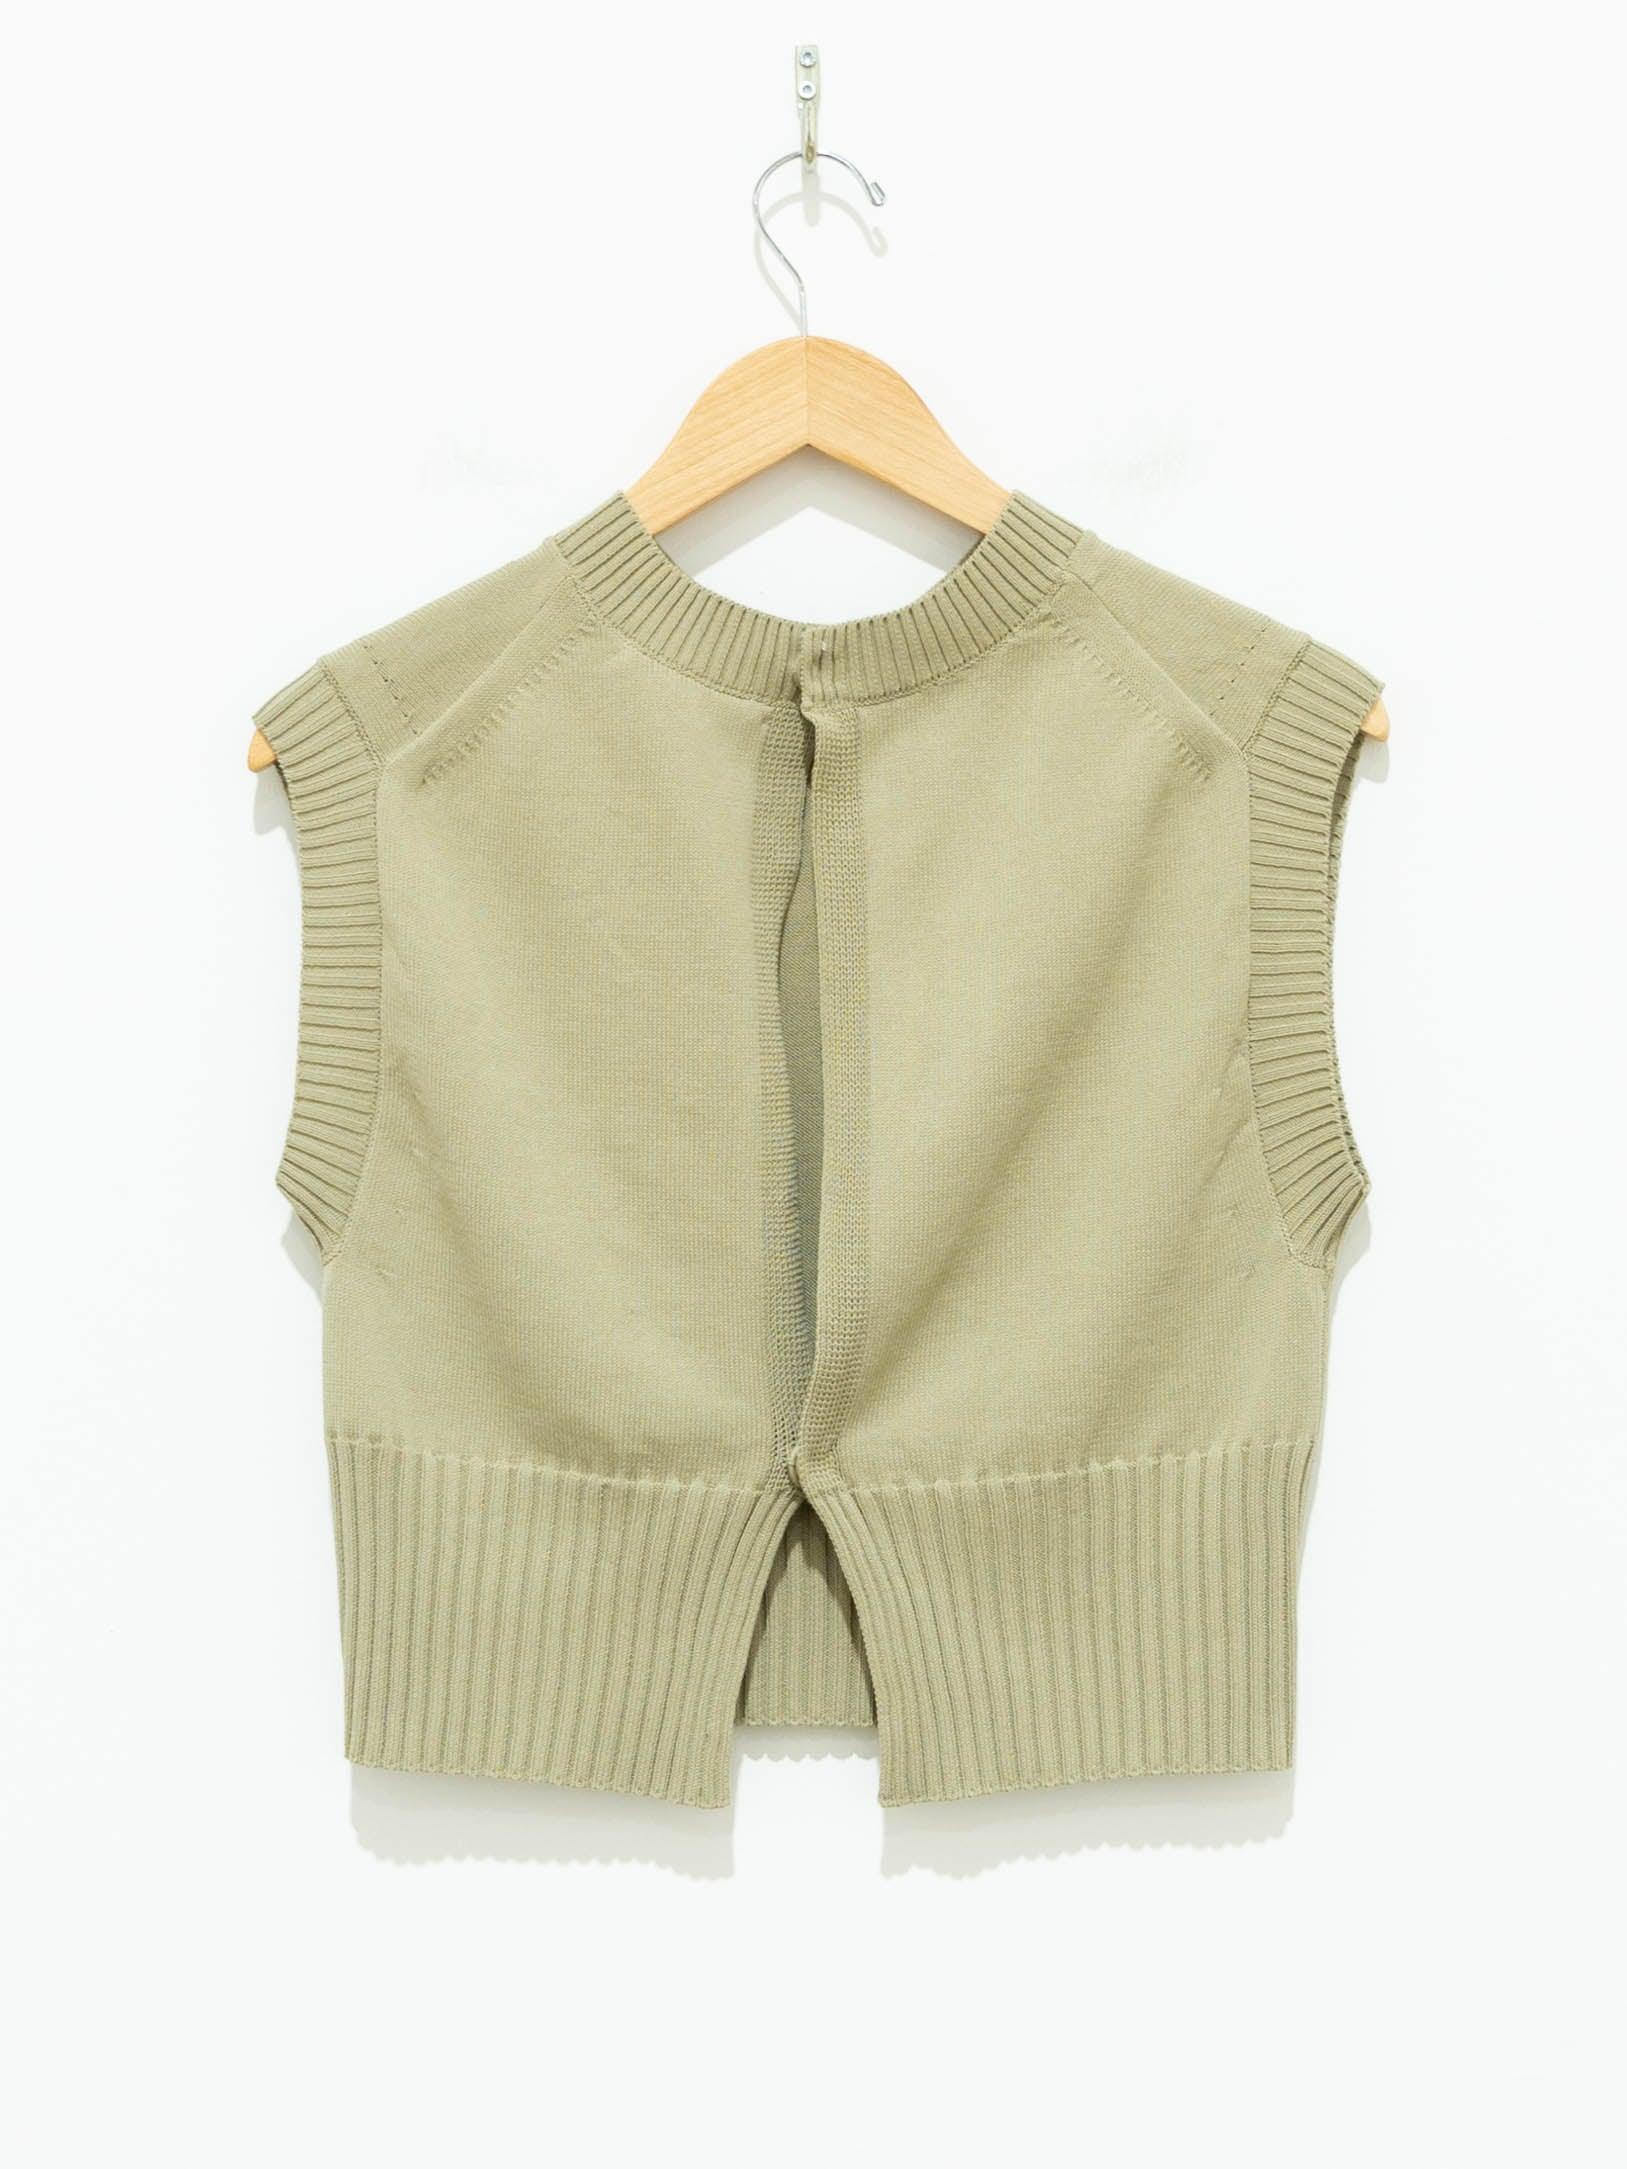 Namu Shop - Auralee Mid Gauge Dry Cotton Knit Vest - Light Beige